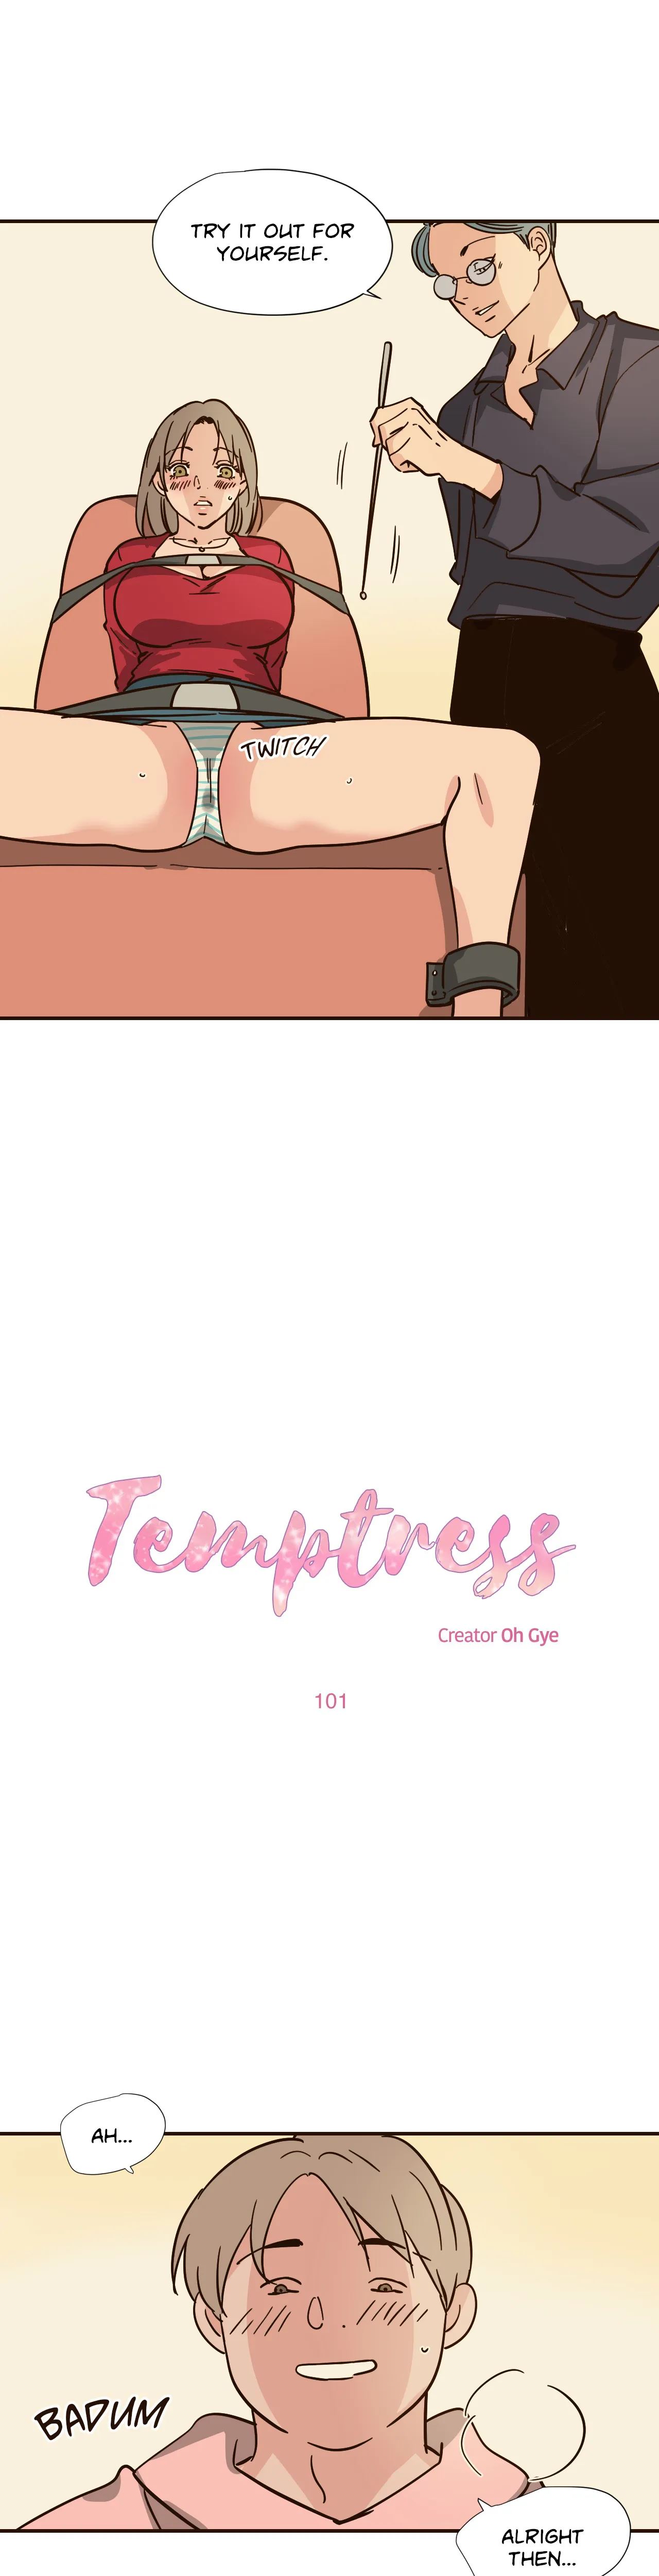 Temptress image